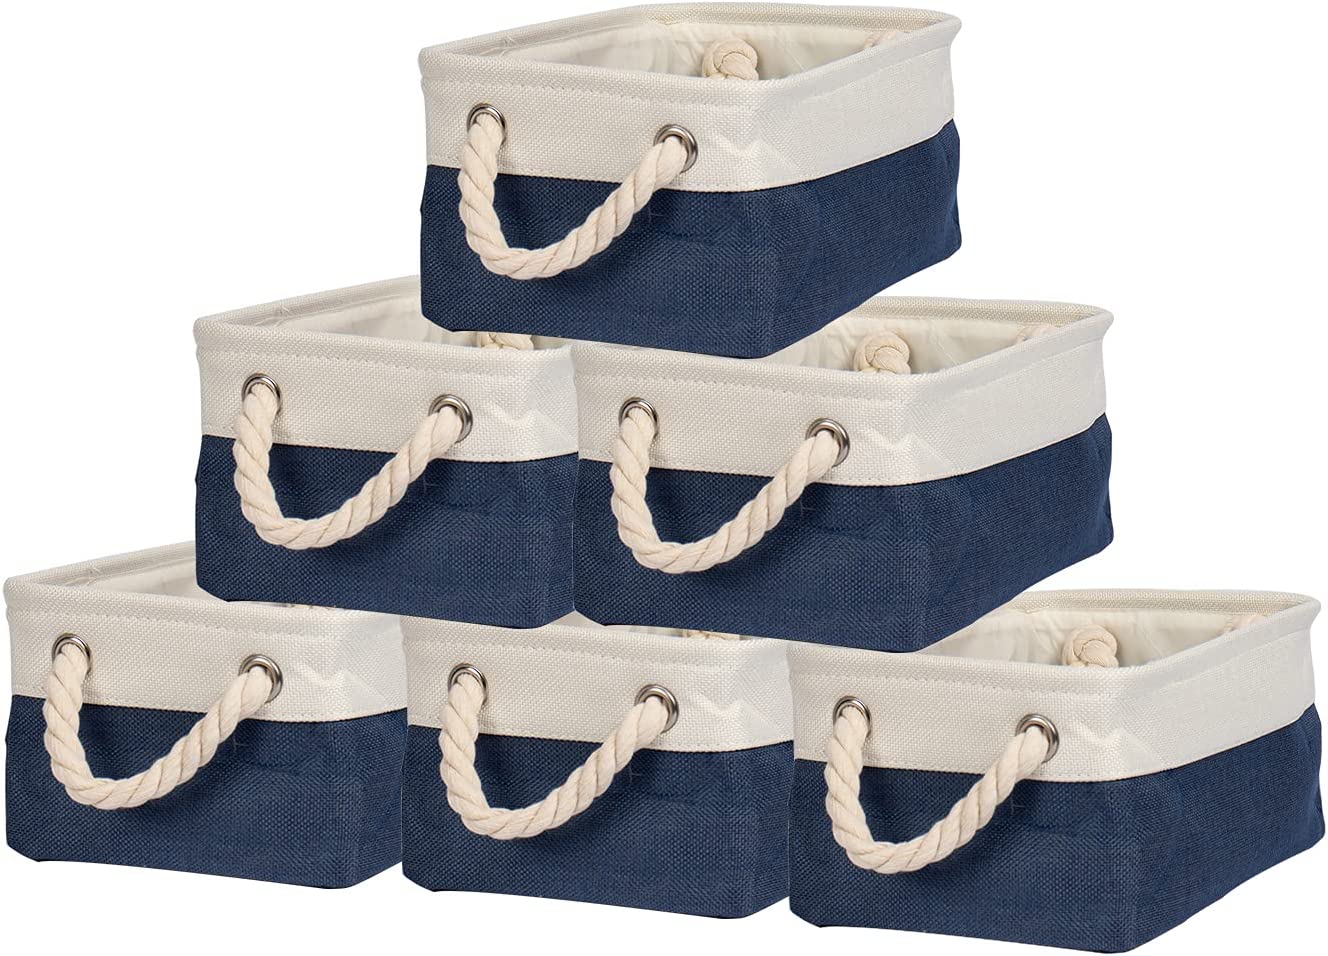 HOSEN Storage Basket Set 3 Pack Large 14 L x 10 W x 9 H - Collapsible Cotton Basket with 2 Handles Organizer Basket Bin Box for Organizing Shelf Nursery Home Closet （Coffee)